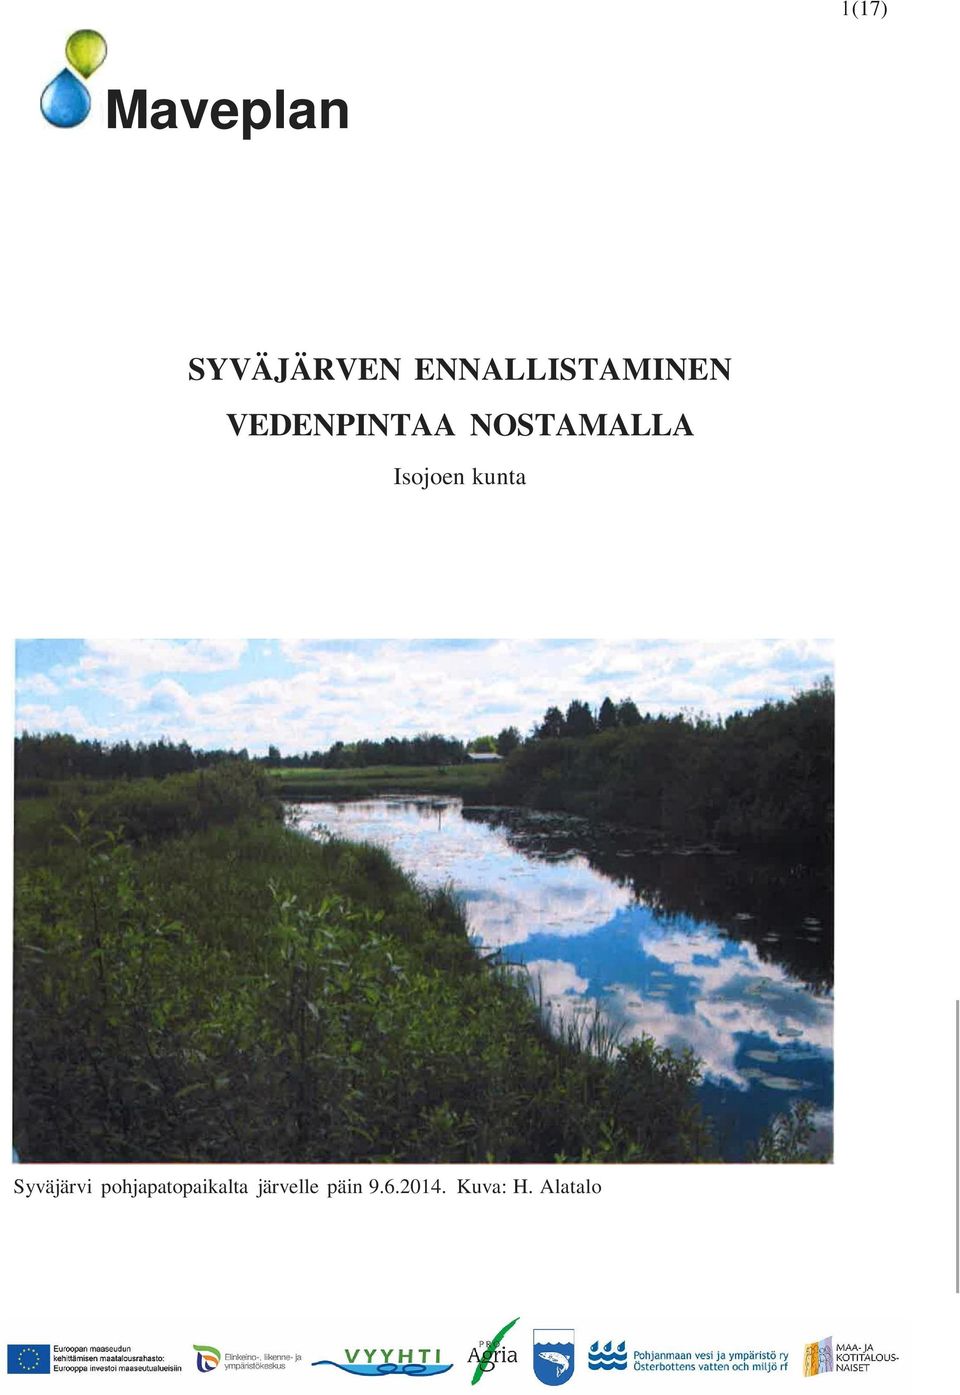 NOSTAMALLA Isojoen kunta Syväjärvi